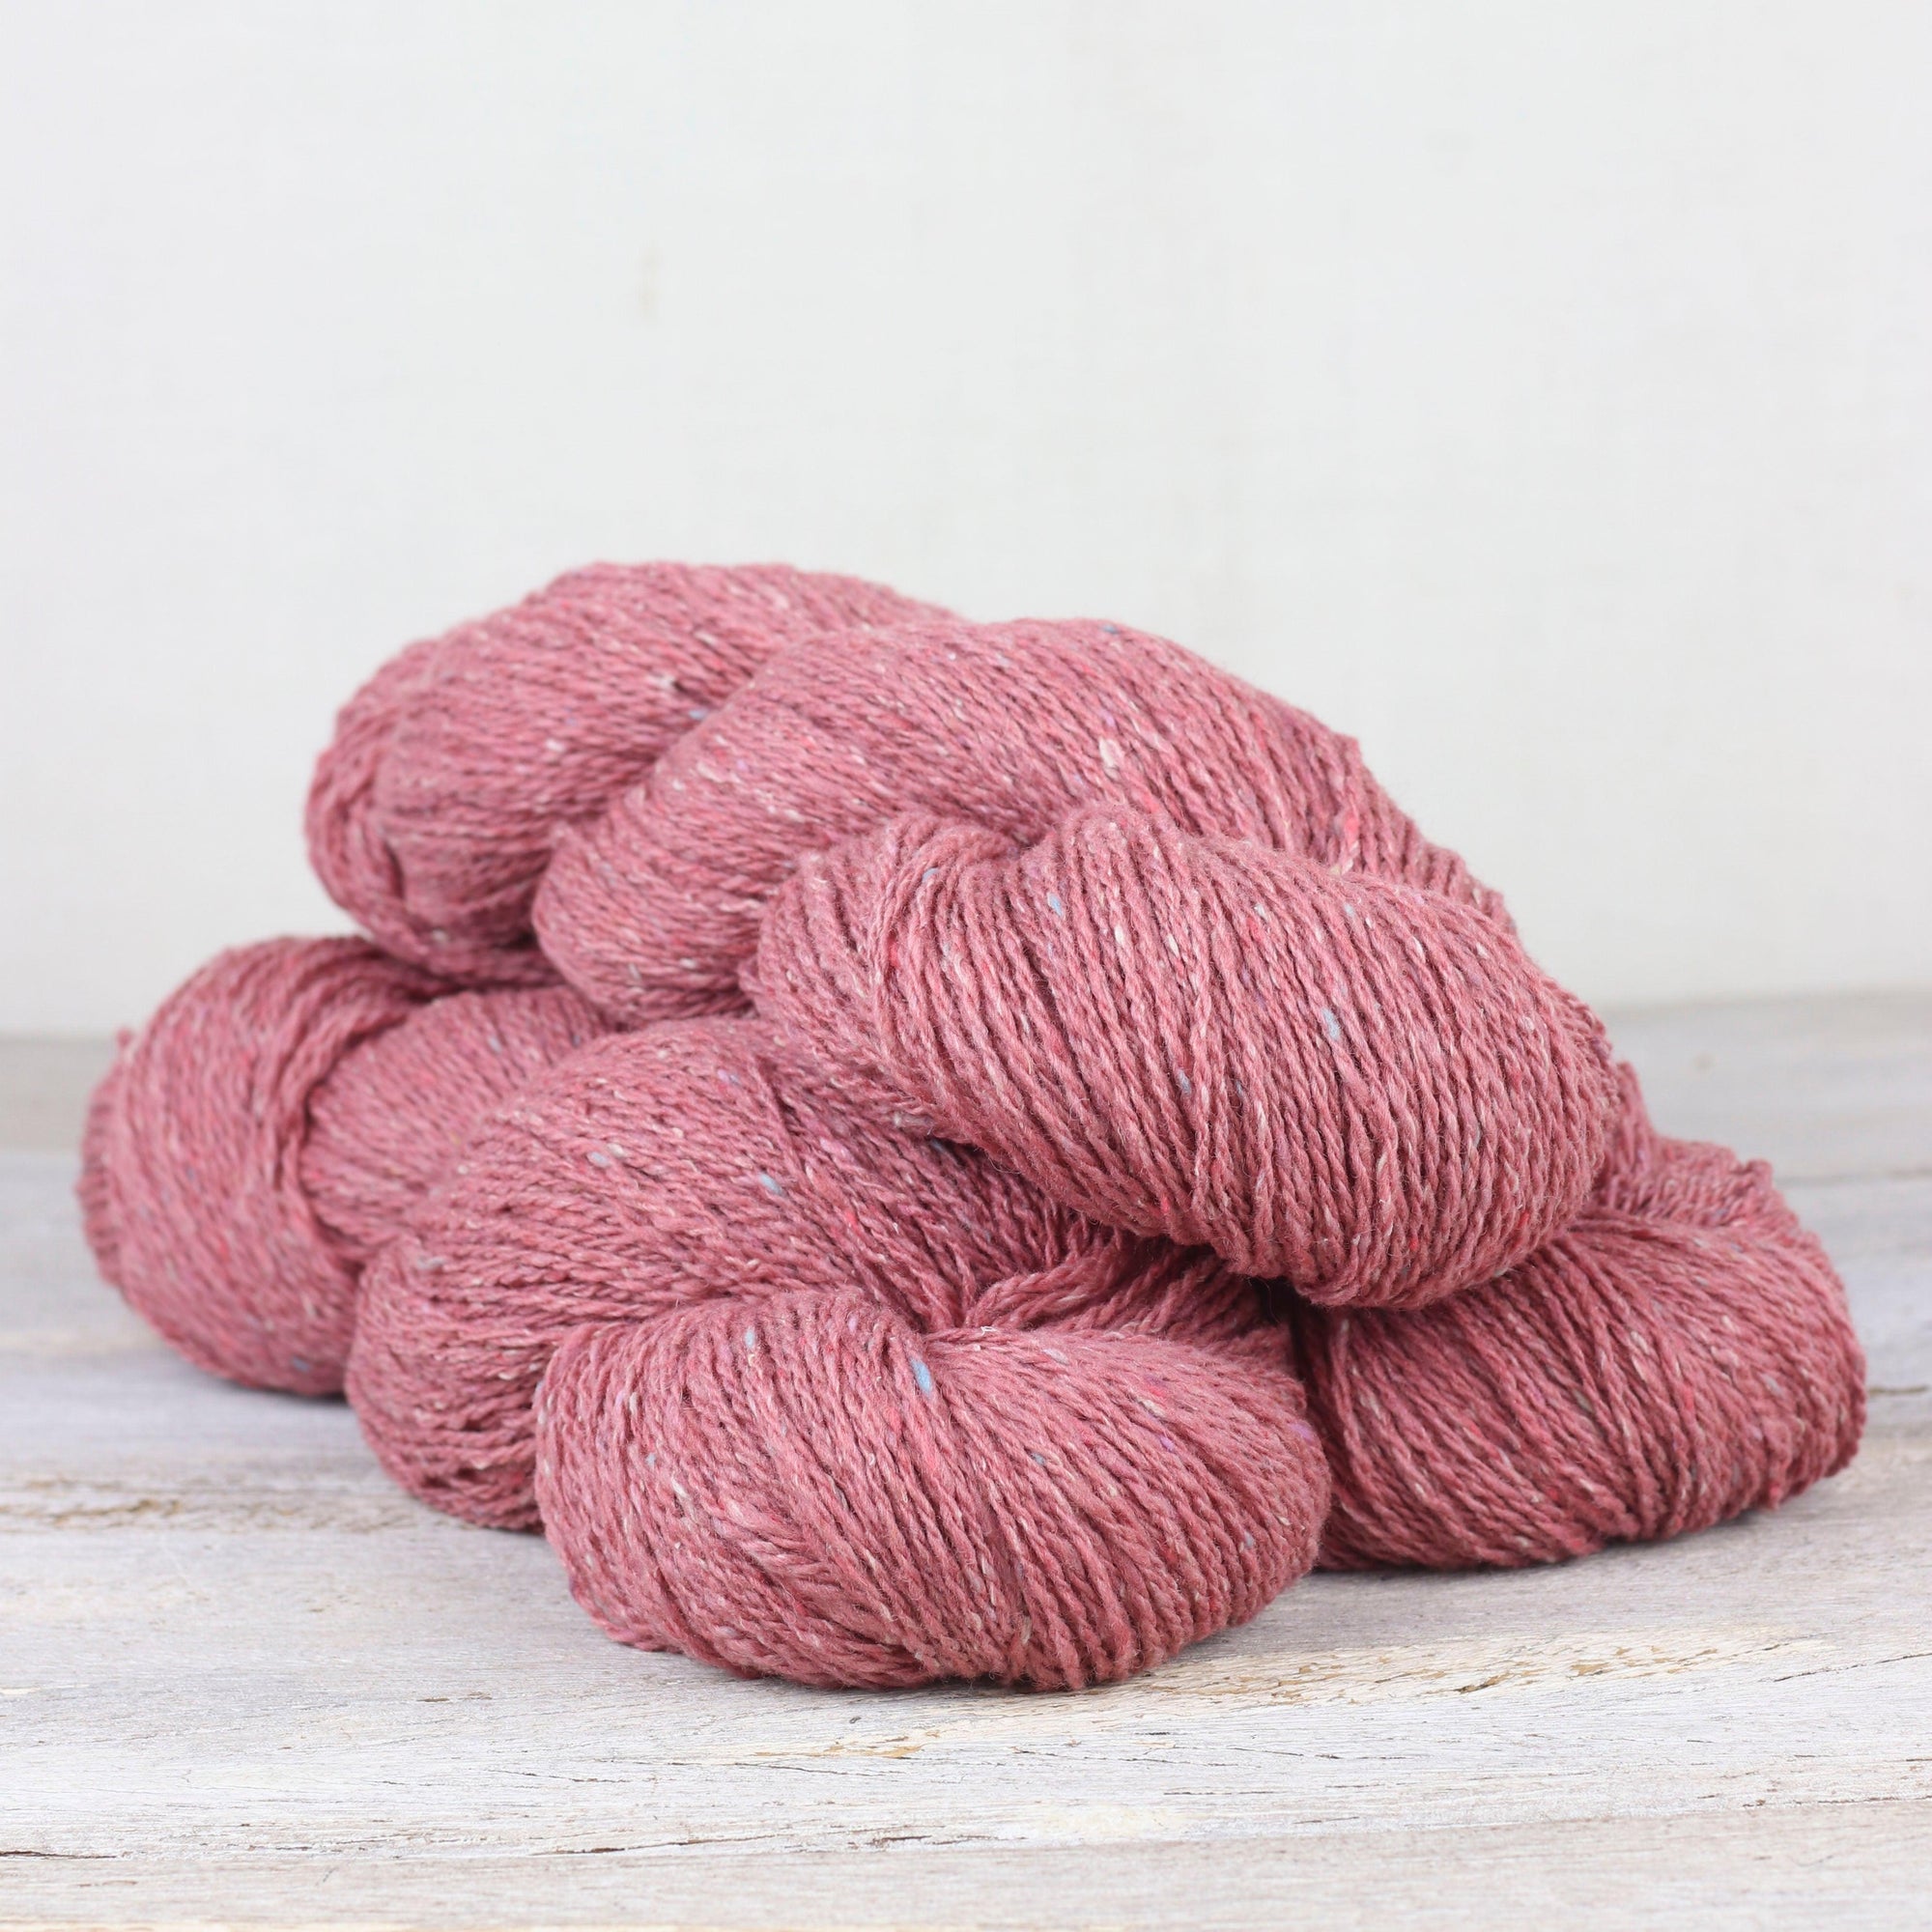 The Fibre Co. The Fibre Co. Arranmore Light - Sea Pink - DK Knitting Yarn